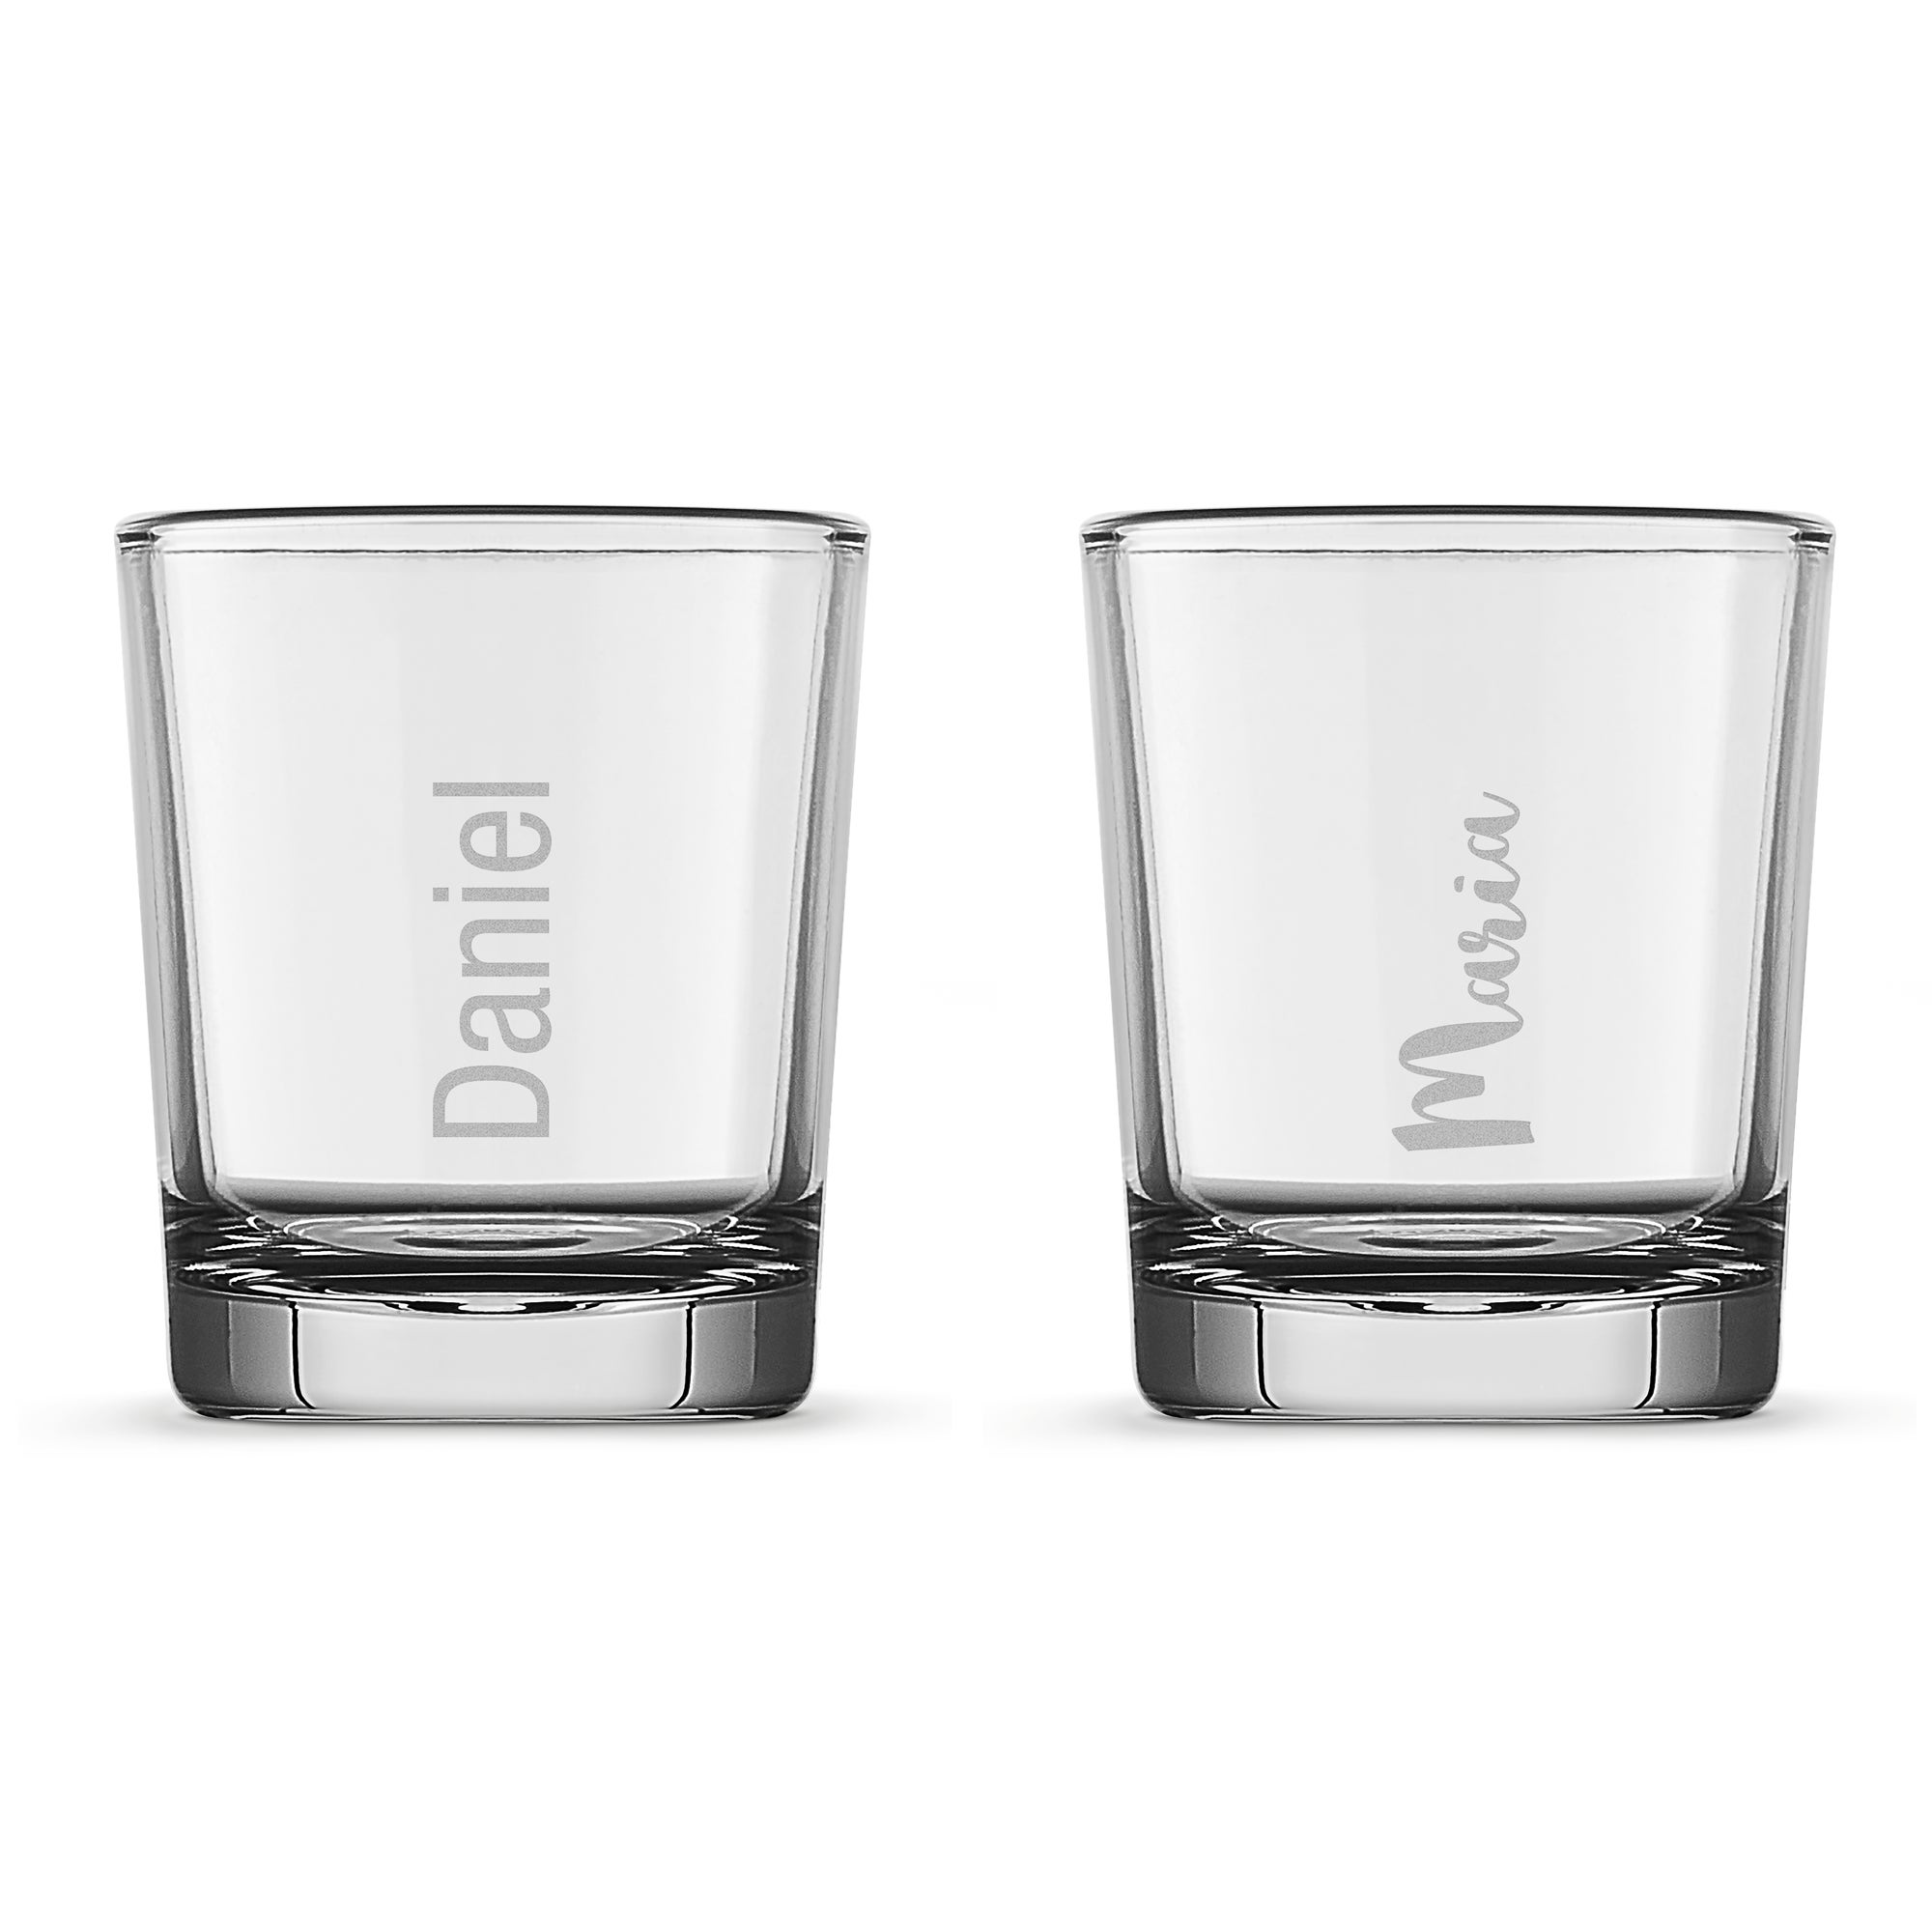 Personalised shot glass - Engraved - 2 pcs